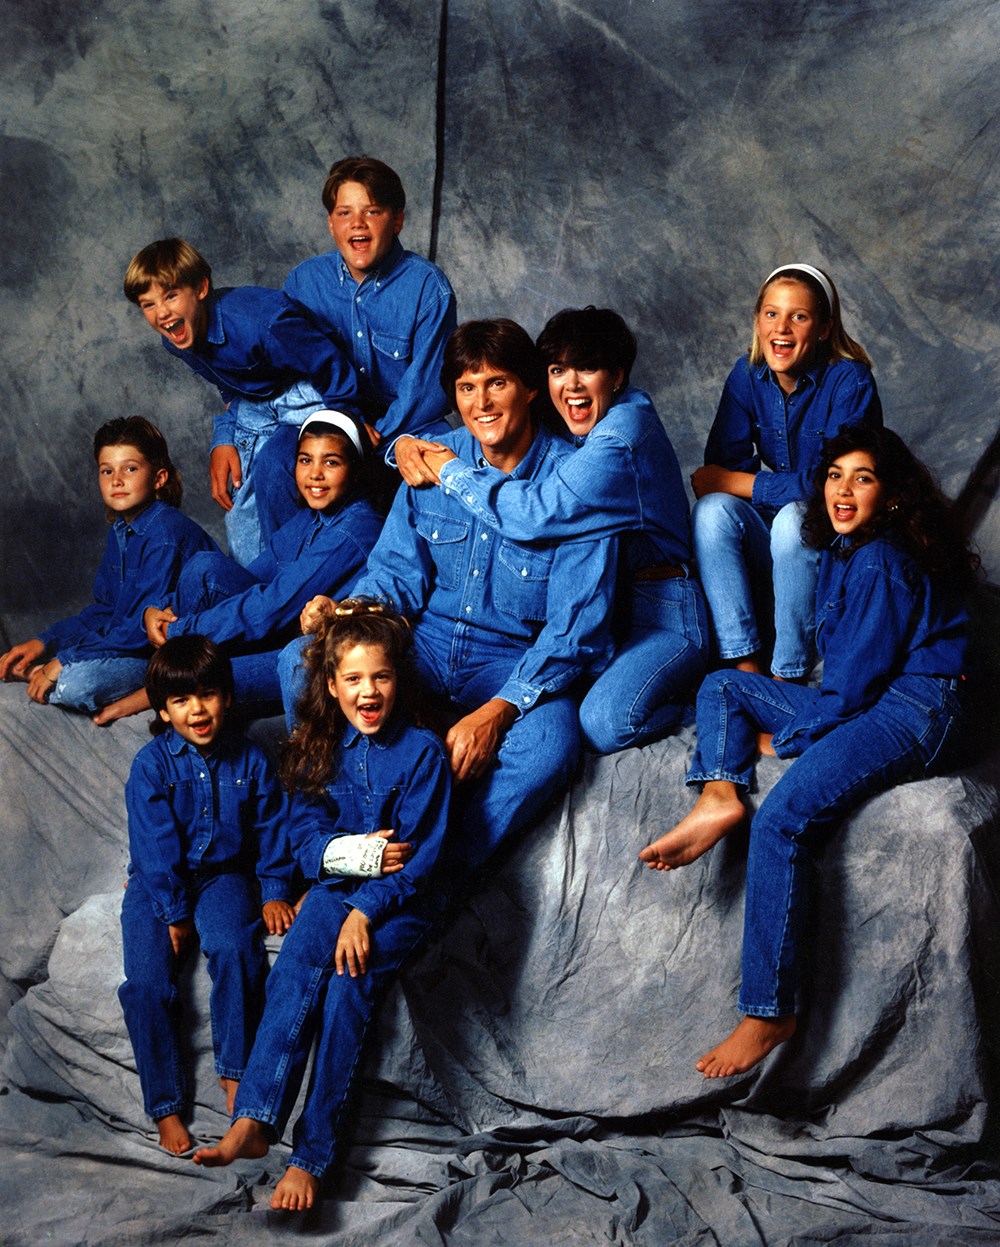 The Kardashian Family in 1991